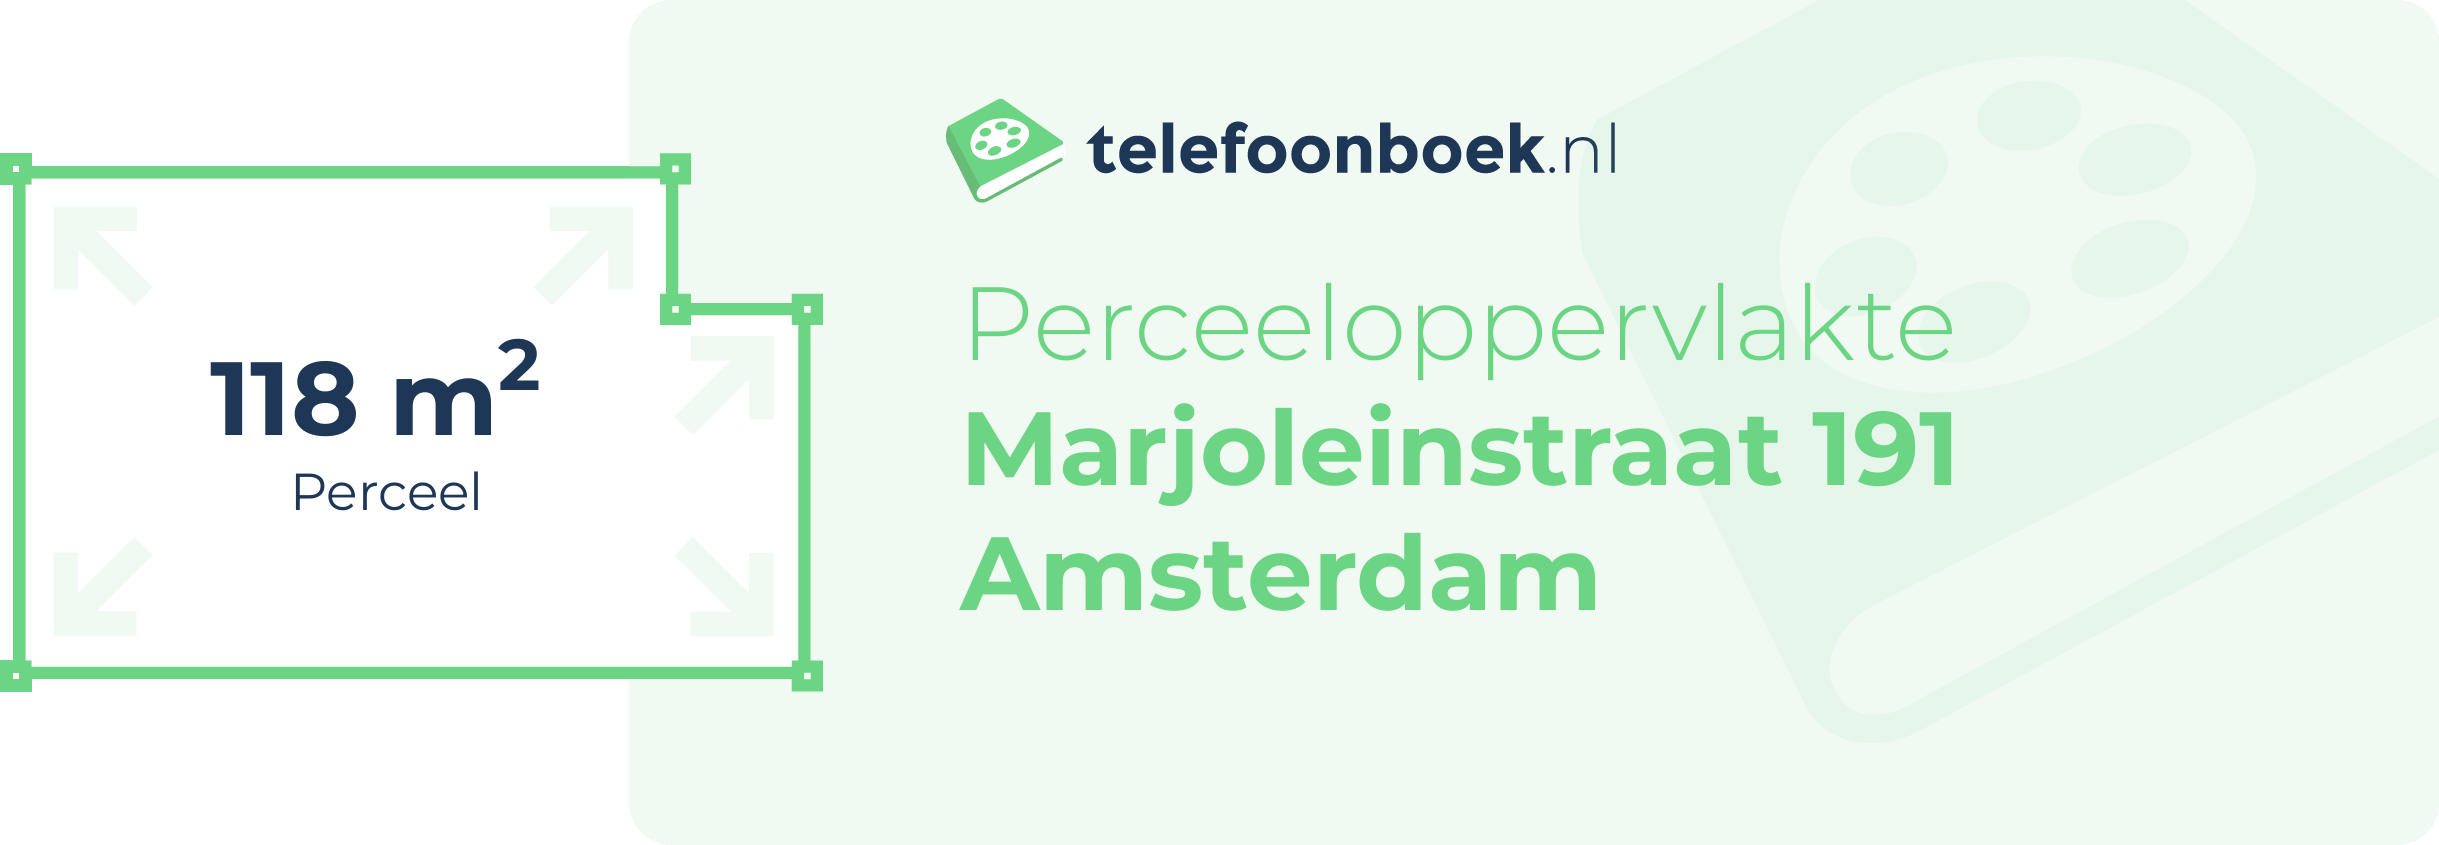 Perceeloppervlakte Marjoleinstraat 191 Amsterdam